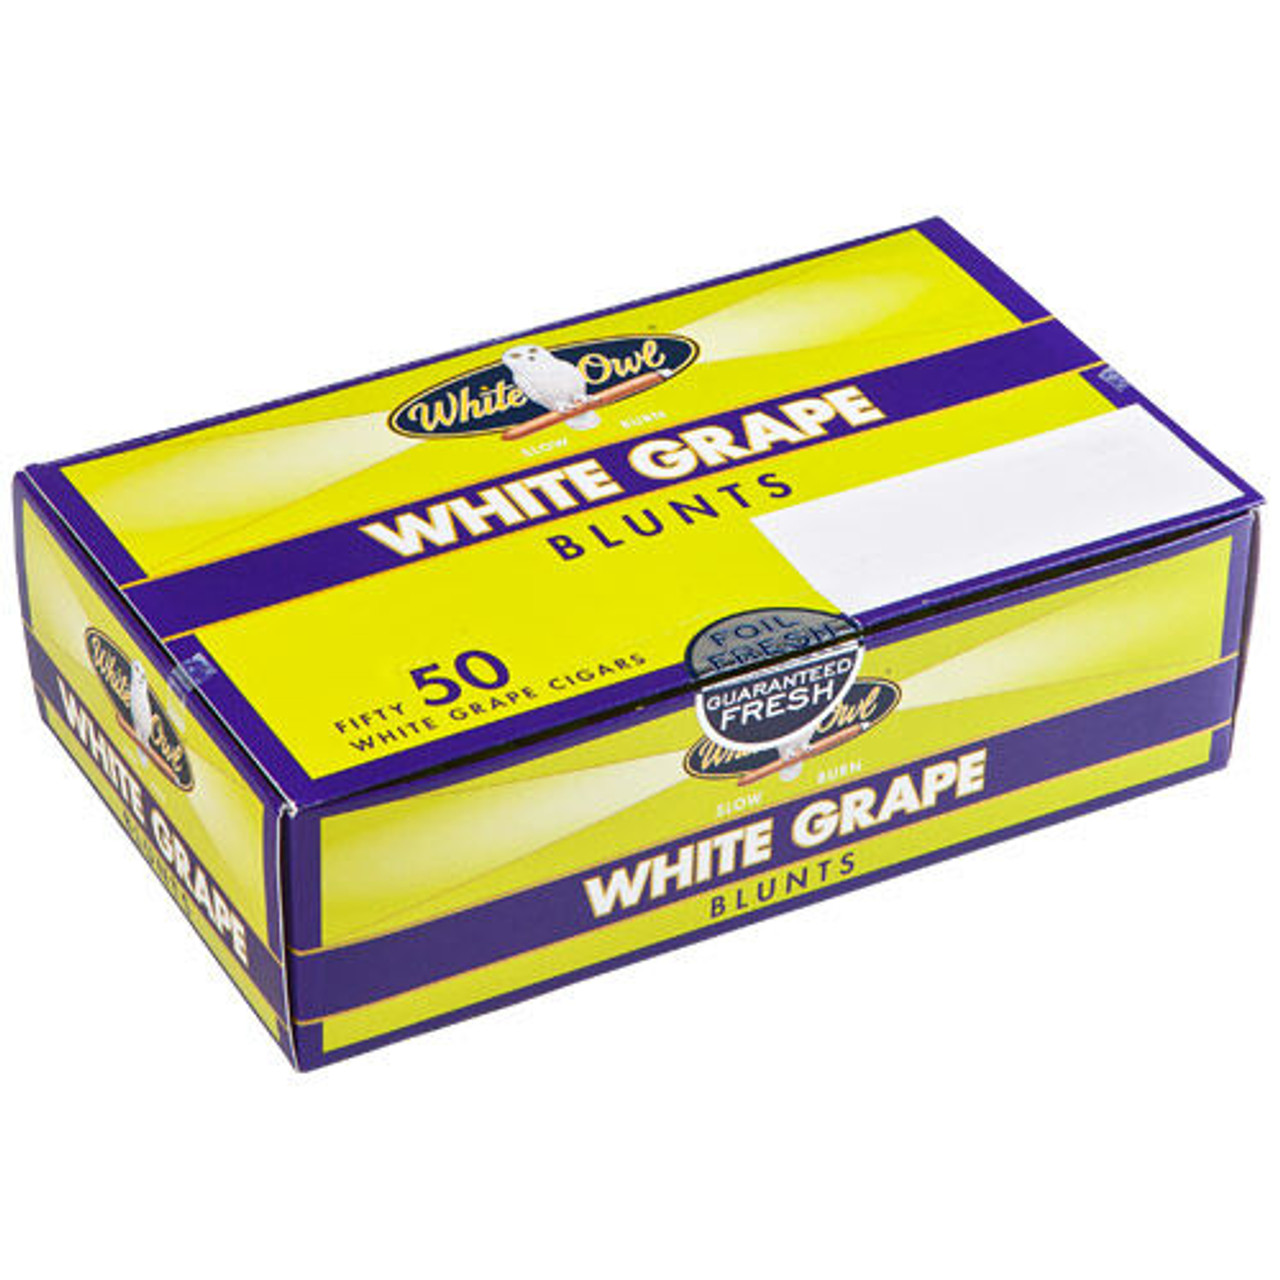 White Owl Blunts White Grape Cigars (Box of 50) - Natural